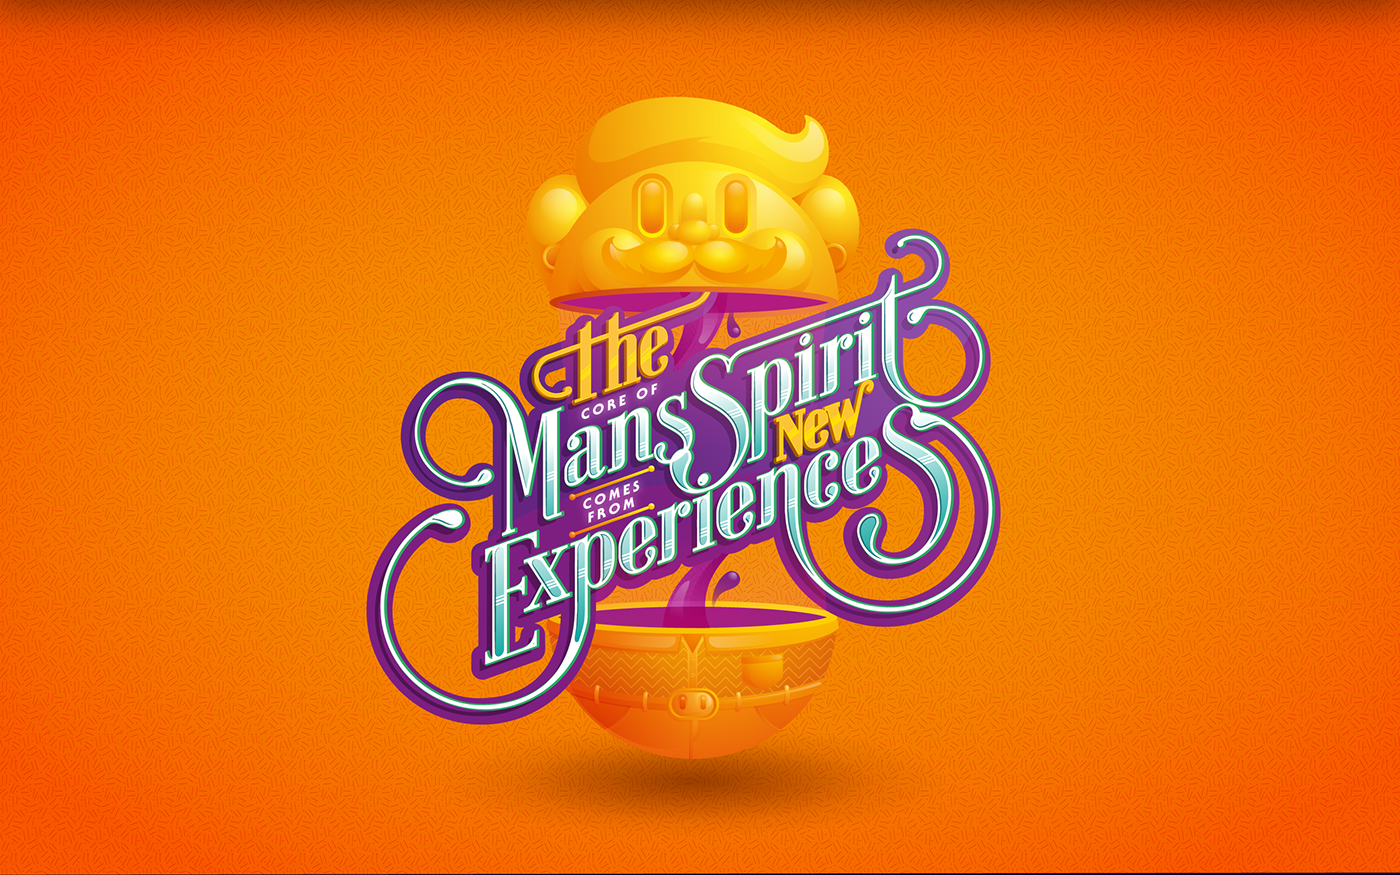 Adobe Portfolio egg lettering Easter star wars dart vader spirit beer Shit holly ball supertramp